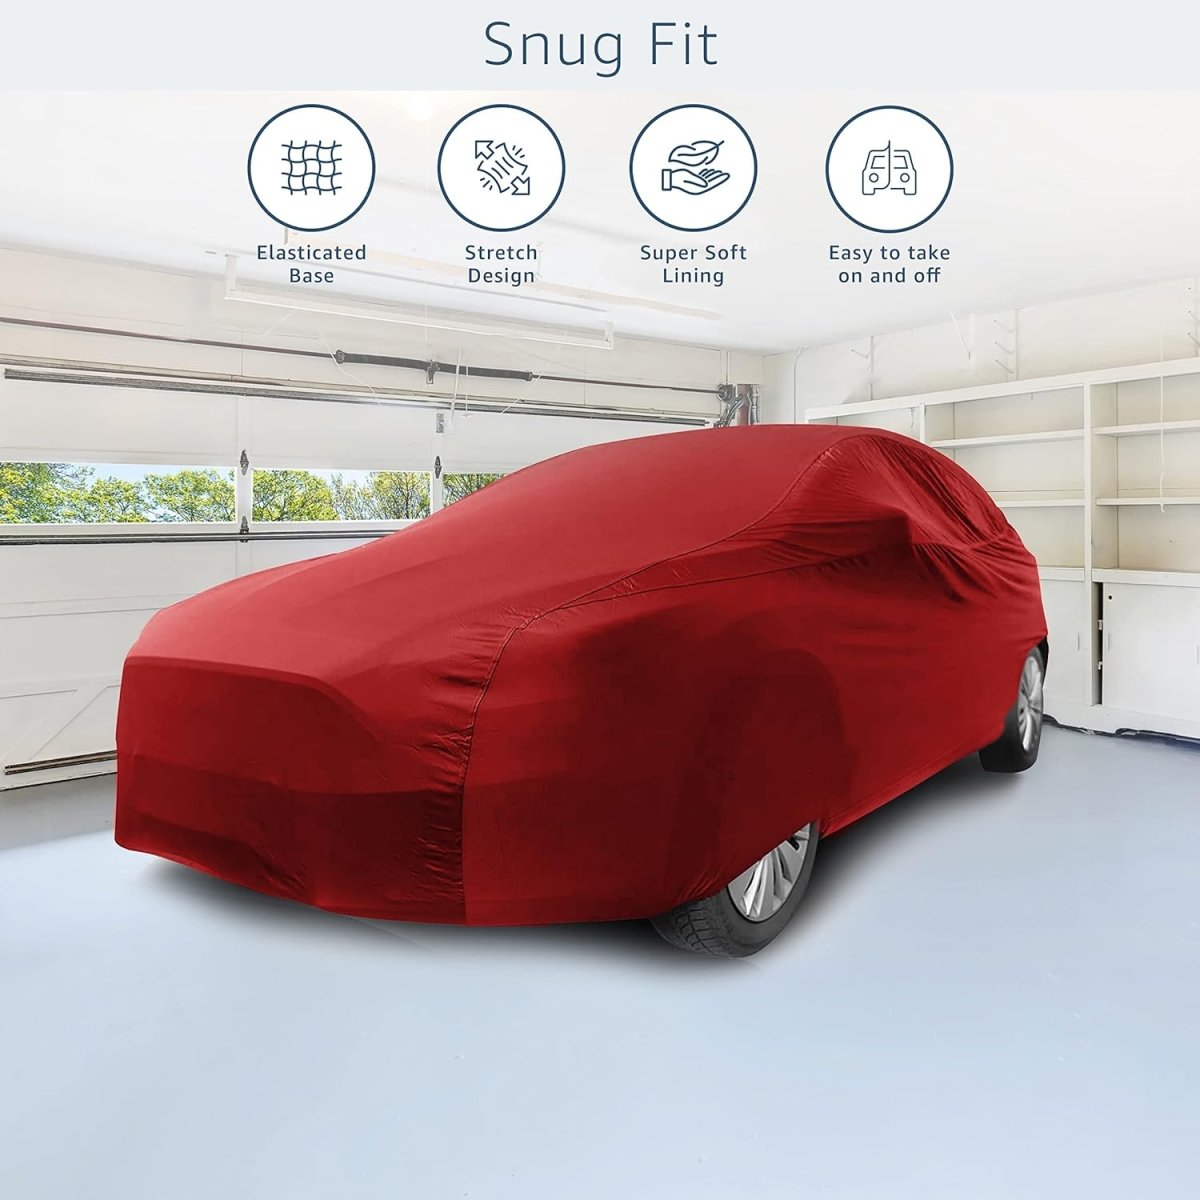 Indoor Dustproof & Breathable Car Cover - Green Flag Shop